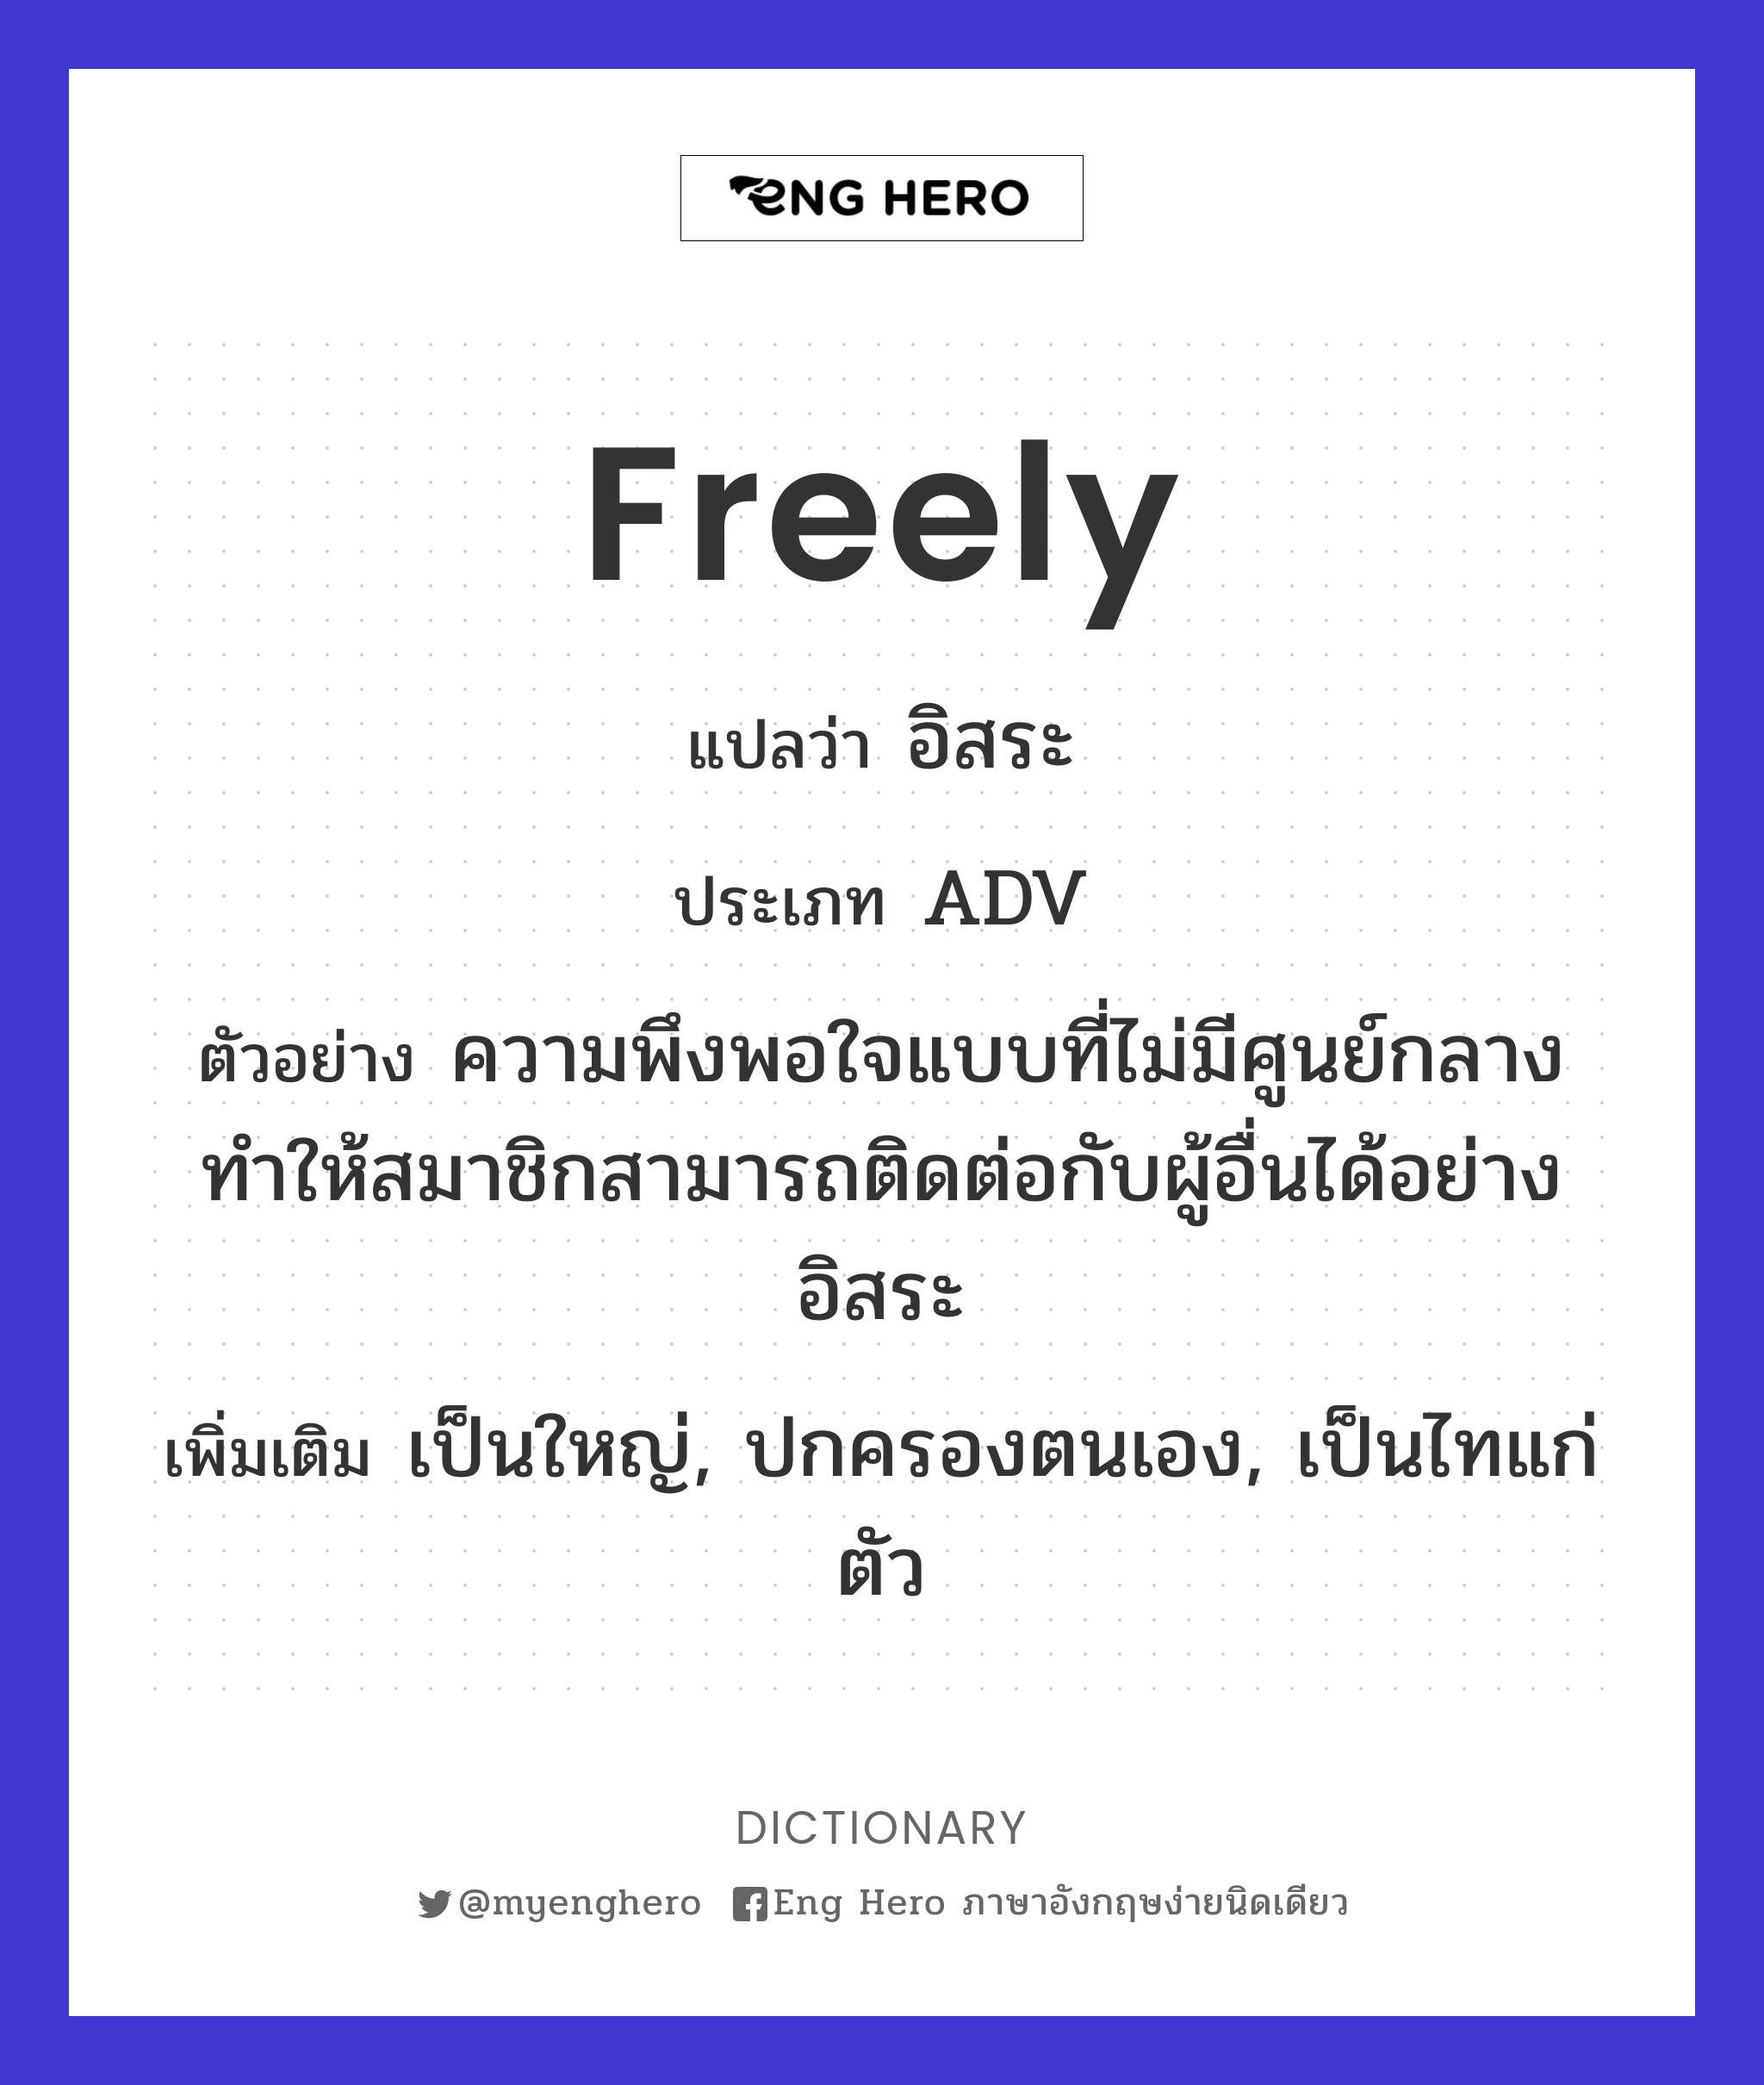 freely